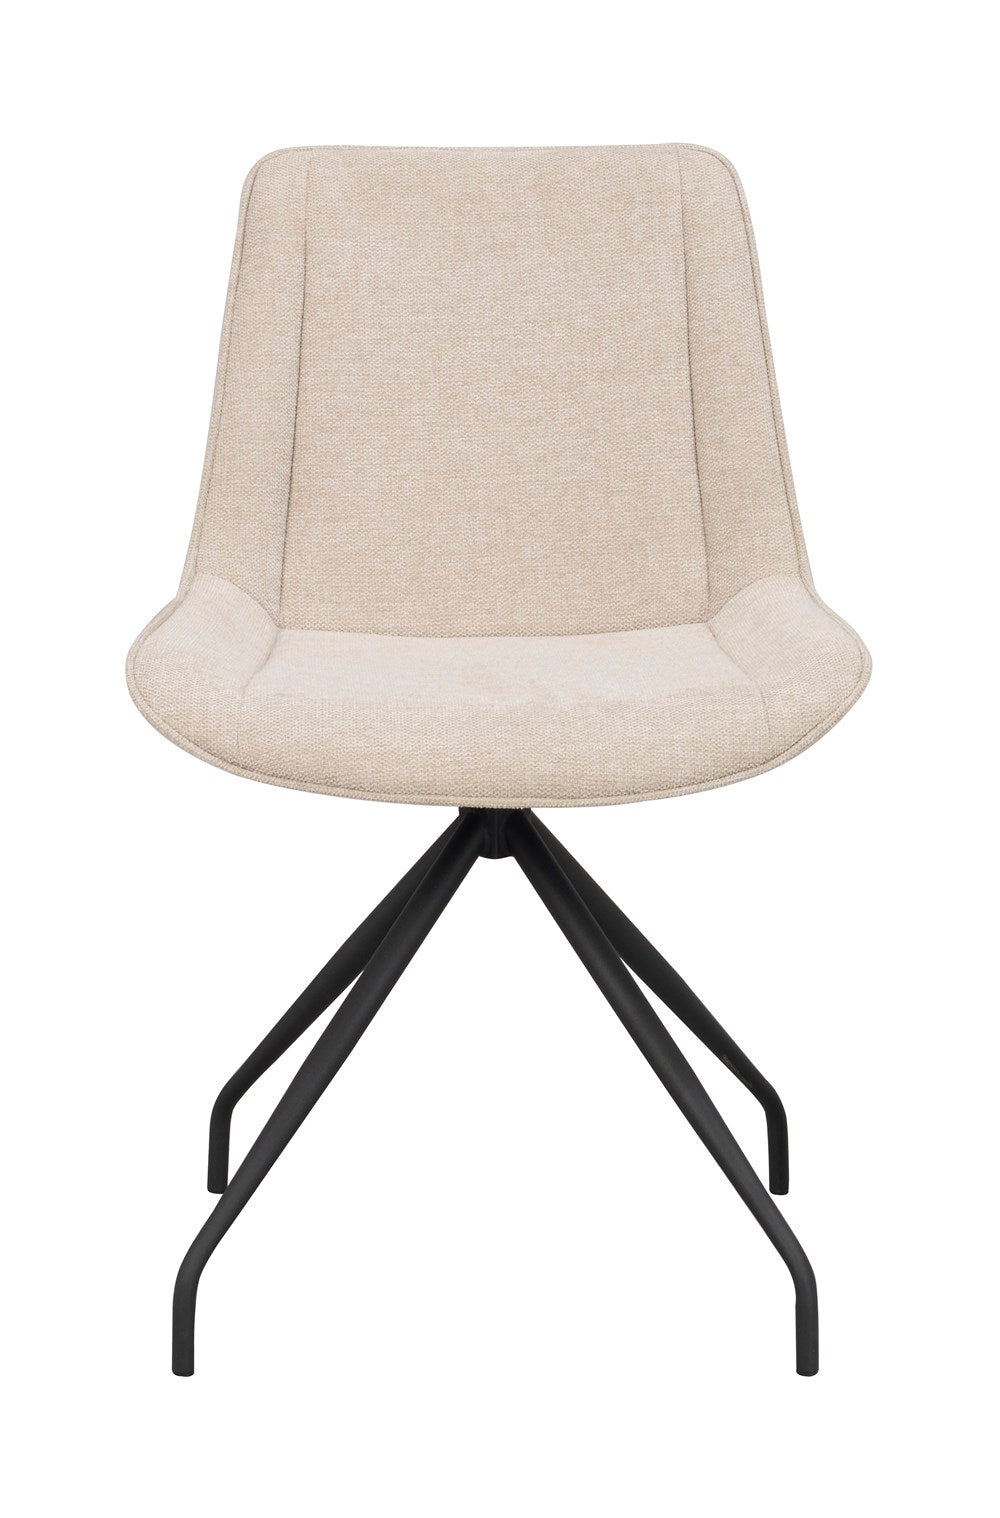 120085_a-rossport-chair-beige-fabric_black